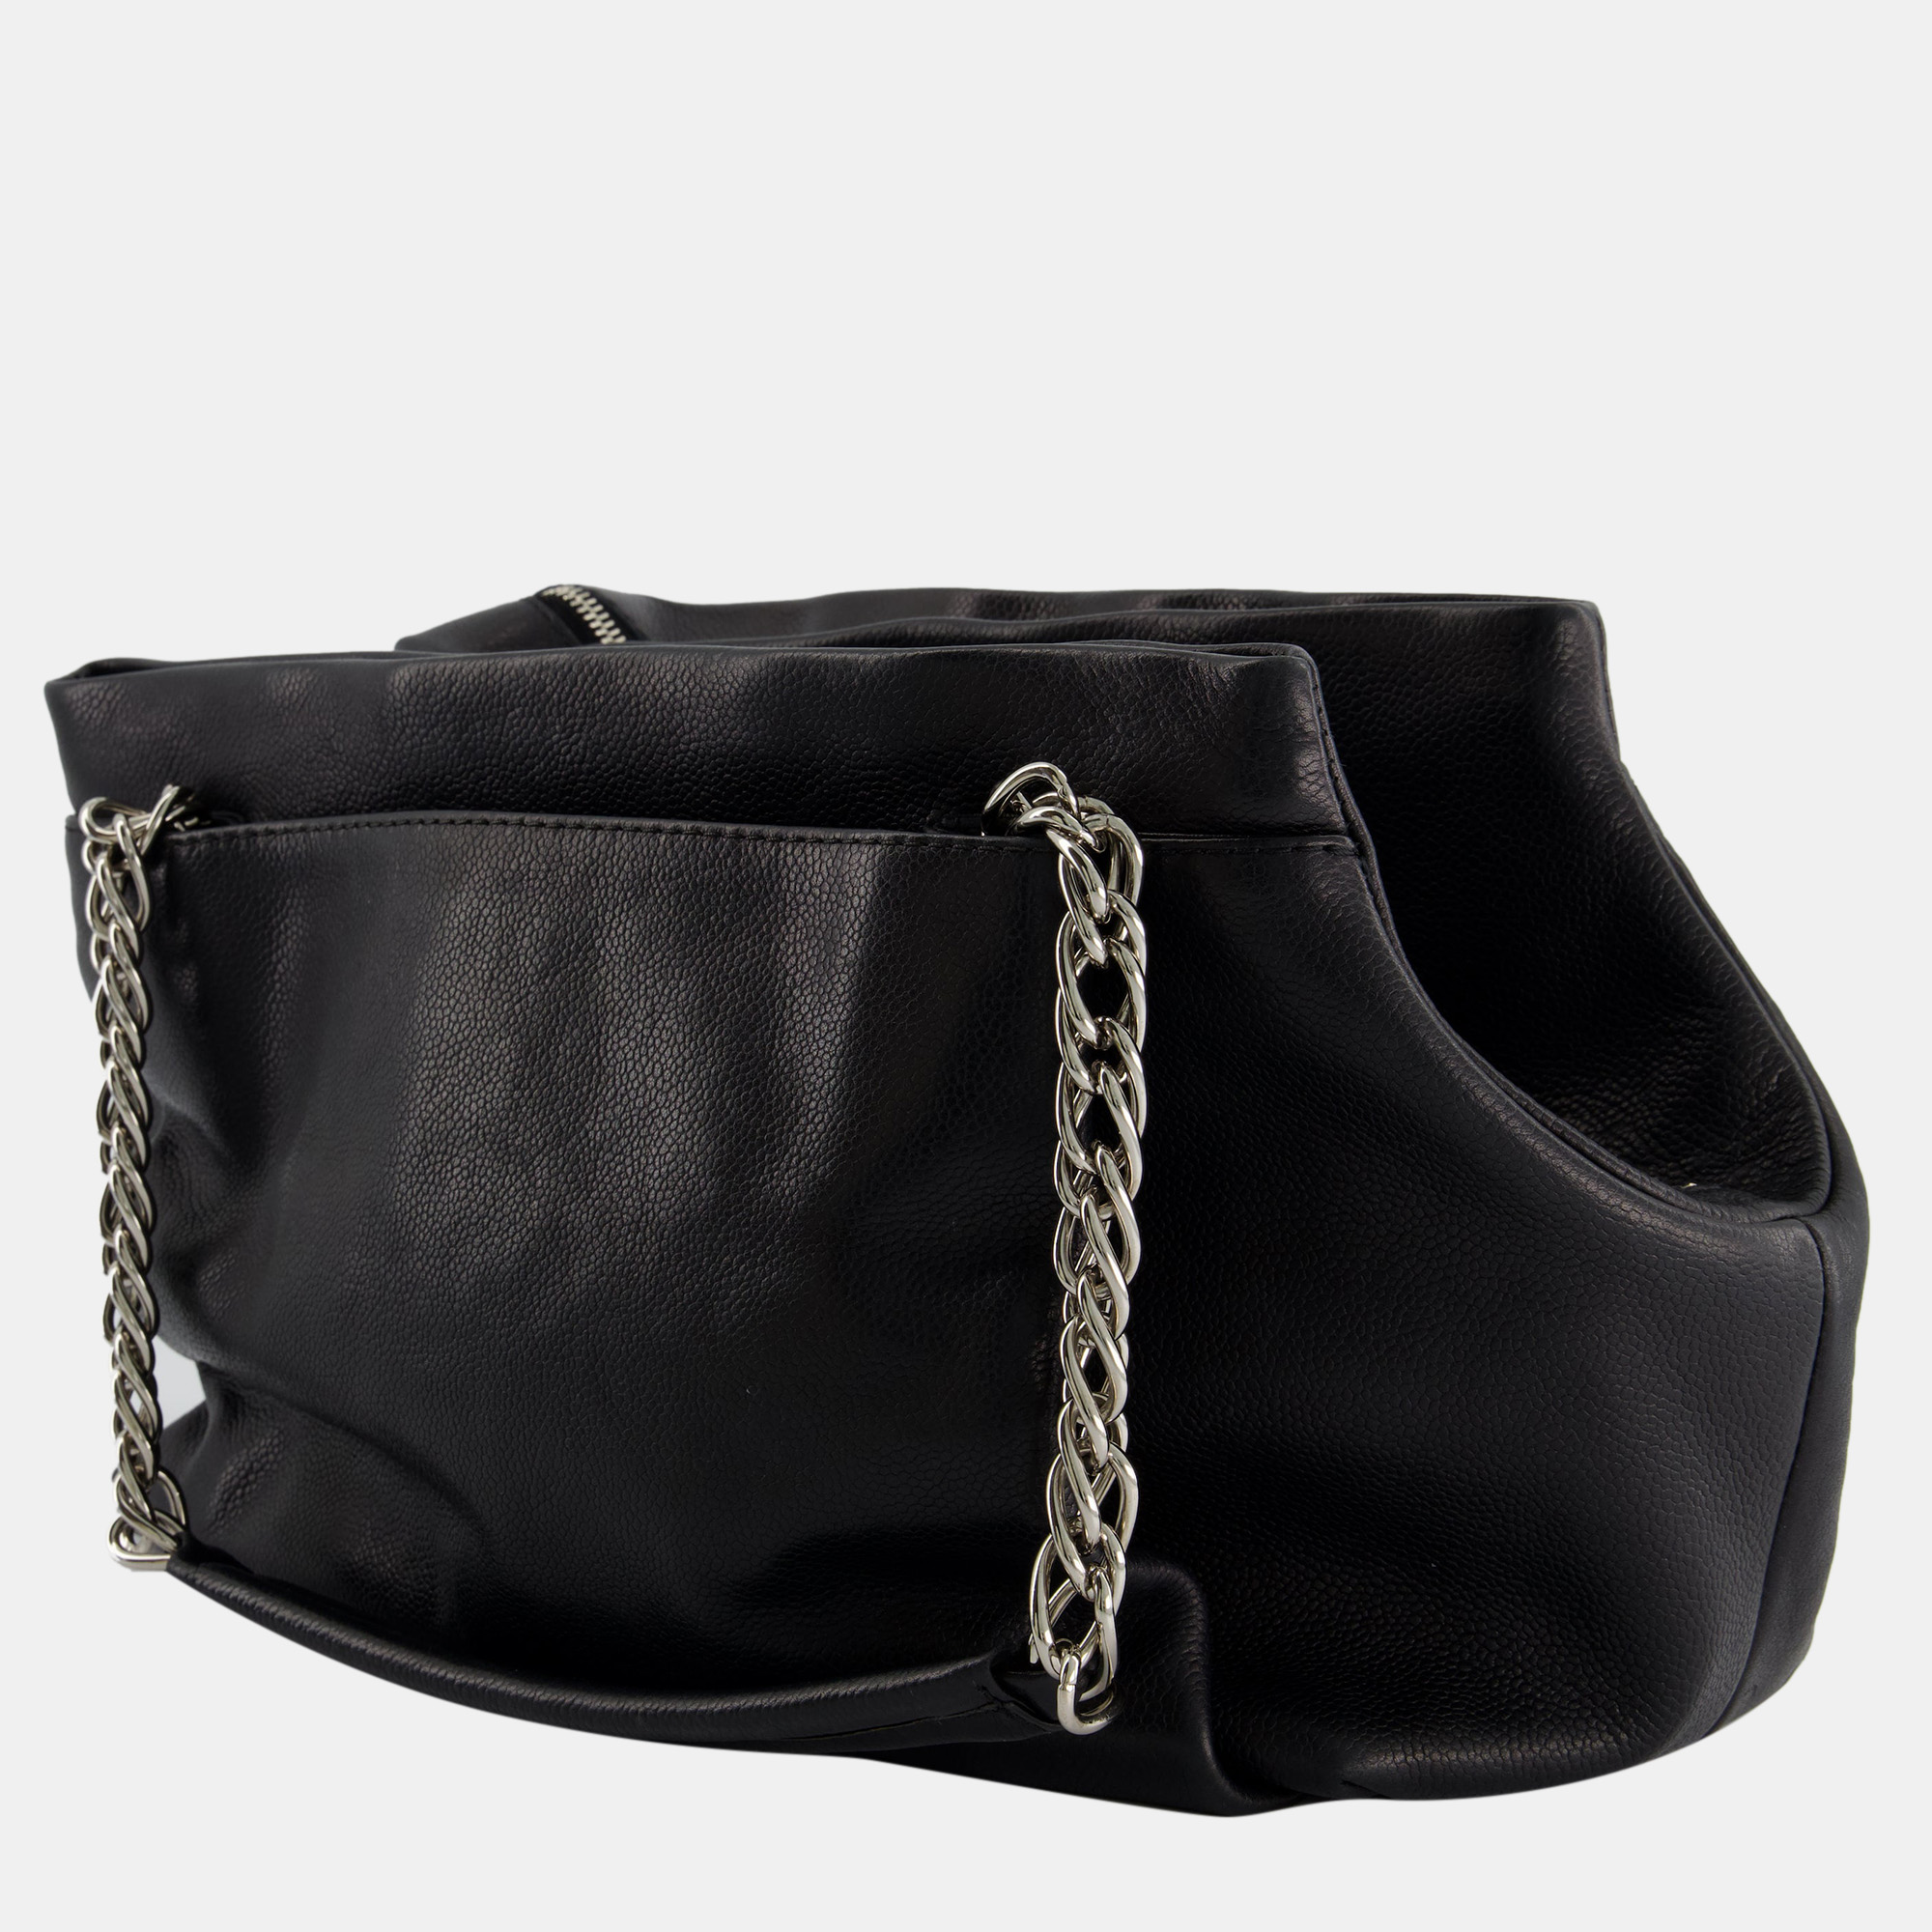 Chanel Black Caviar Leather CC Logo Shoulder Bag With Silver Hardware